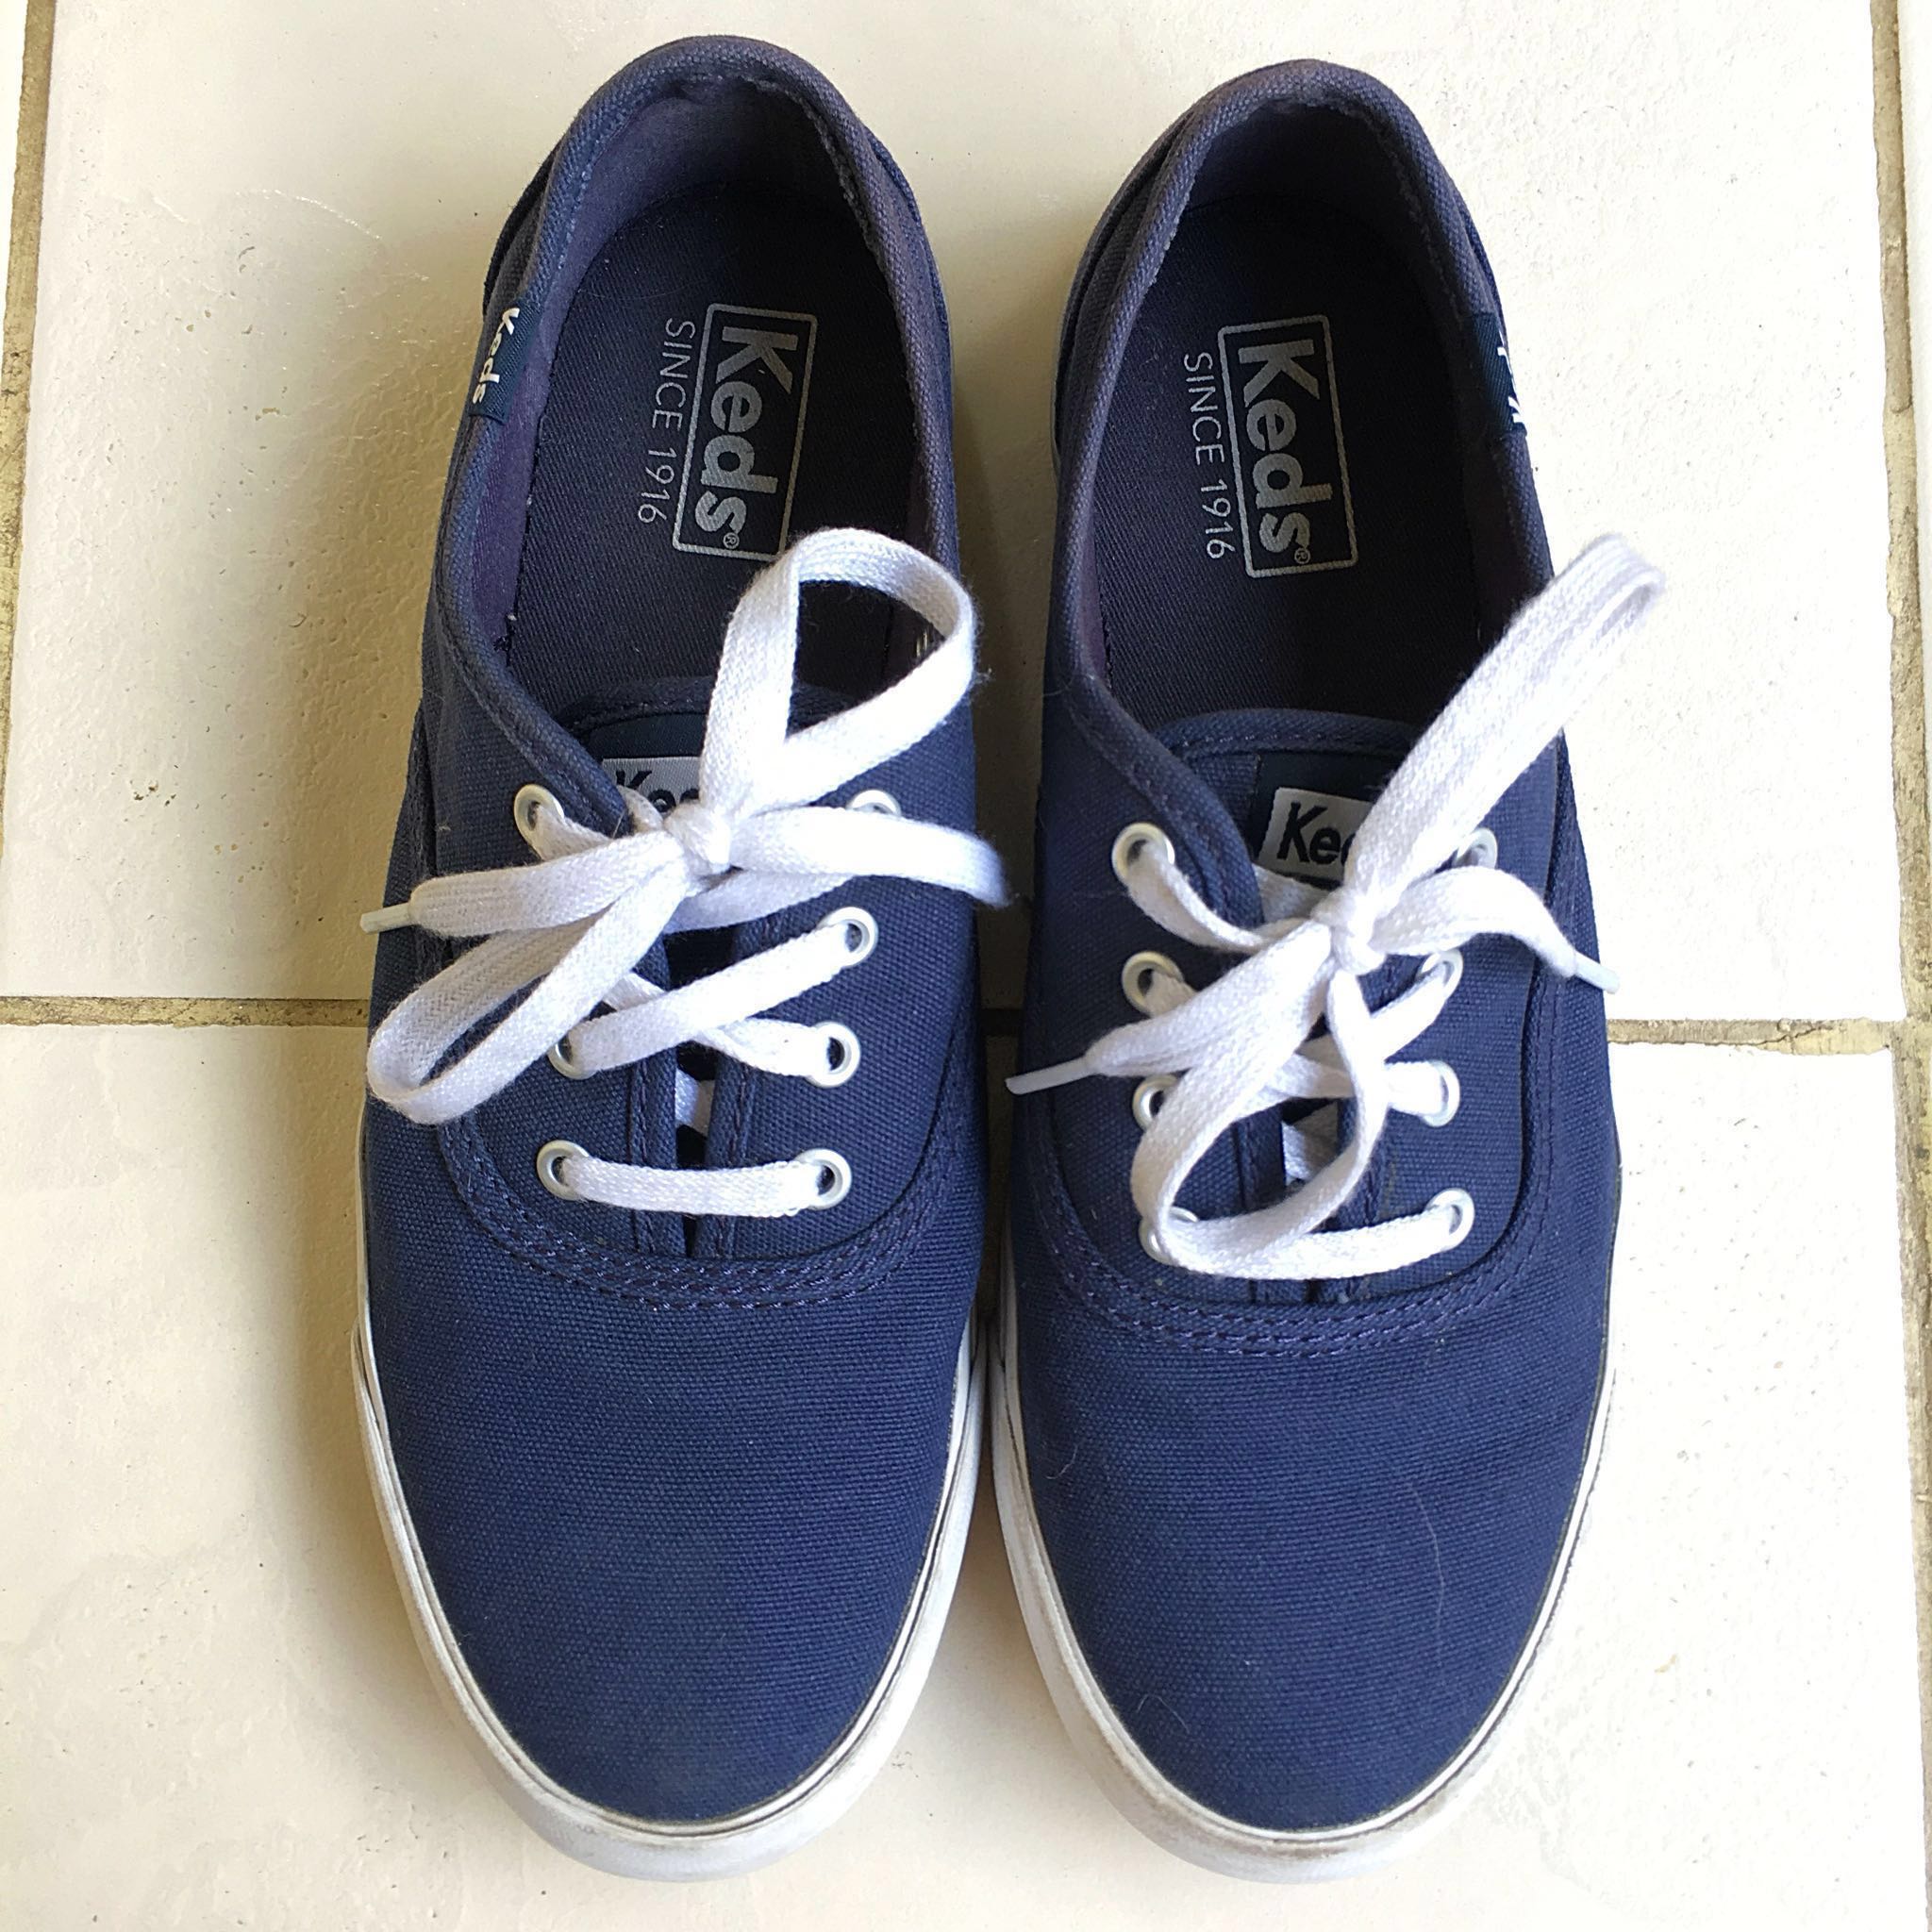 KEDS Navy Blue Sneakers, Women's 